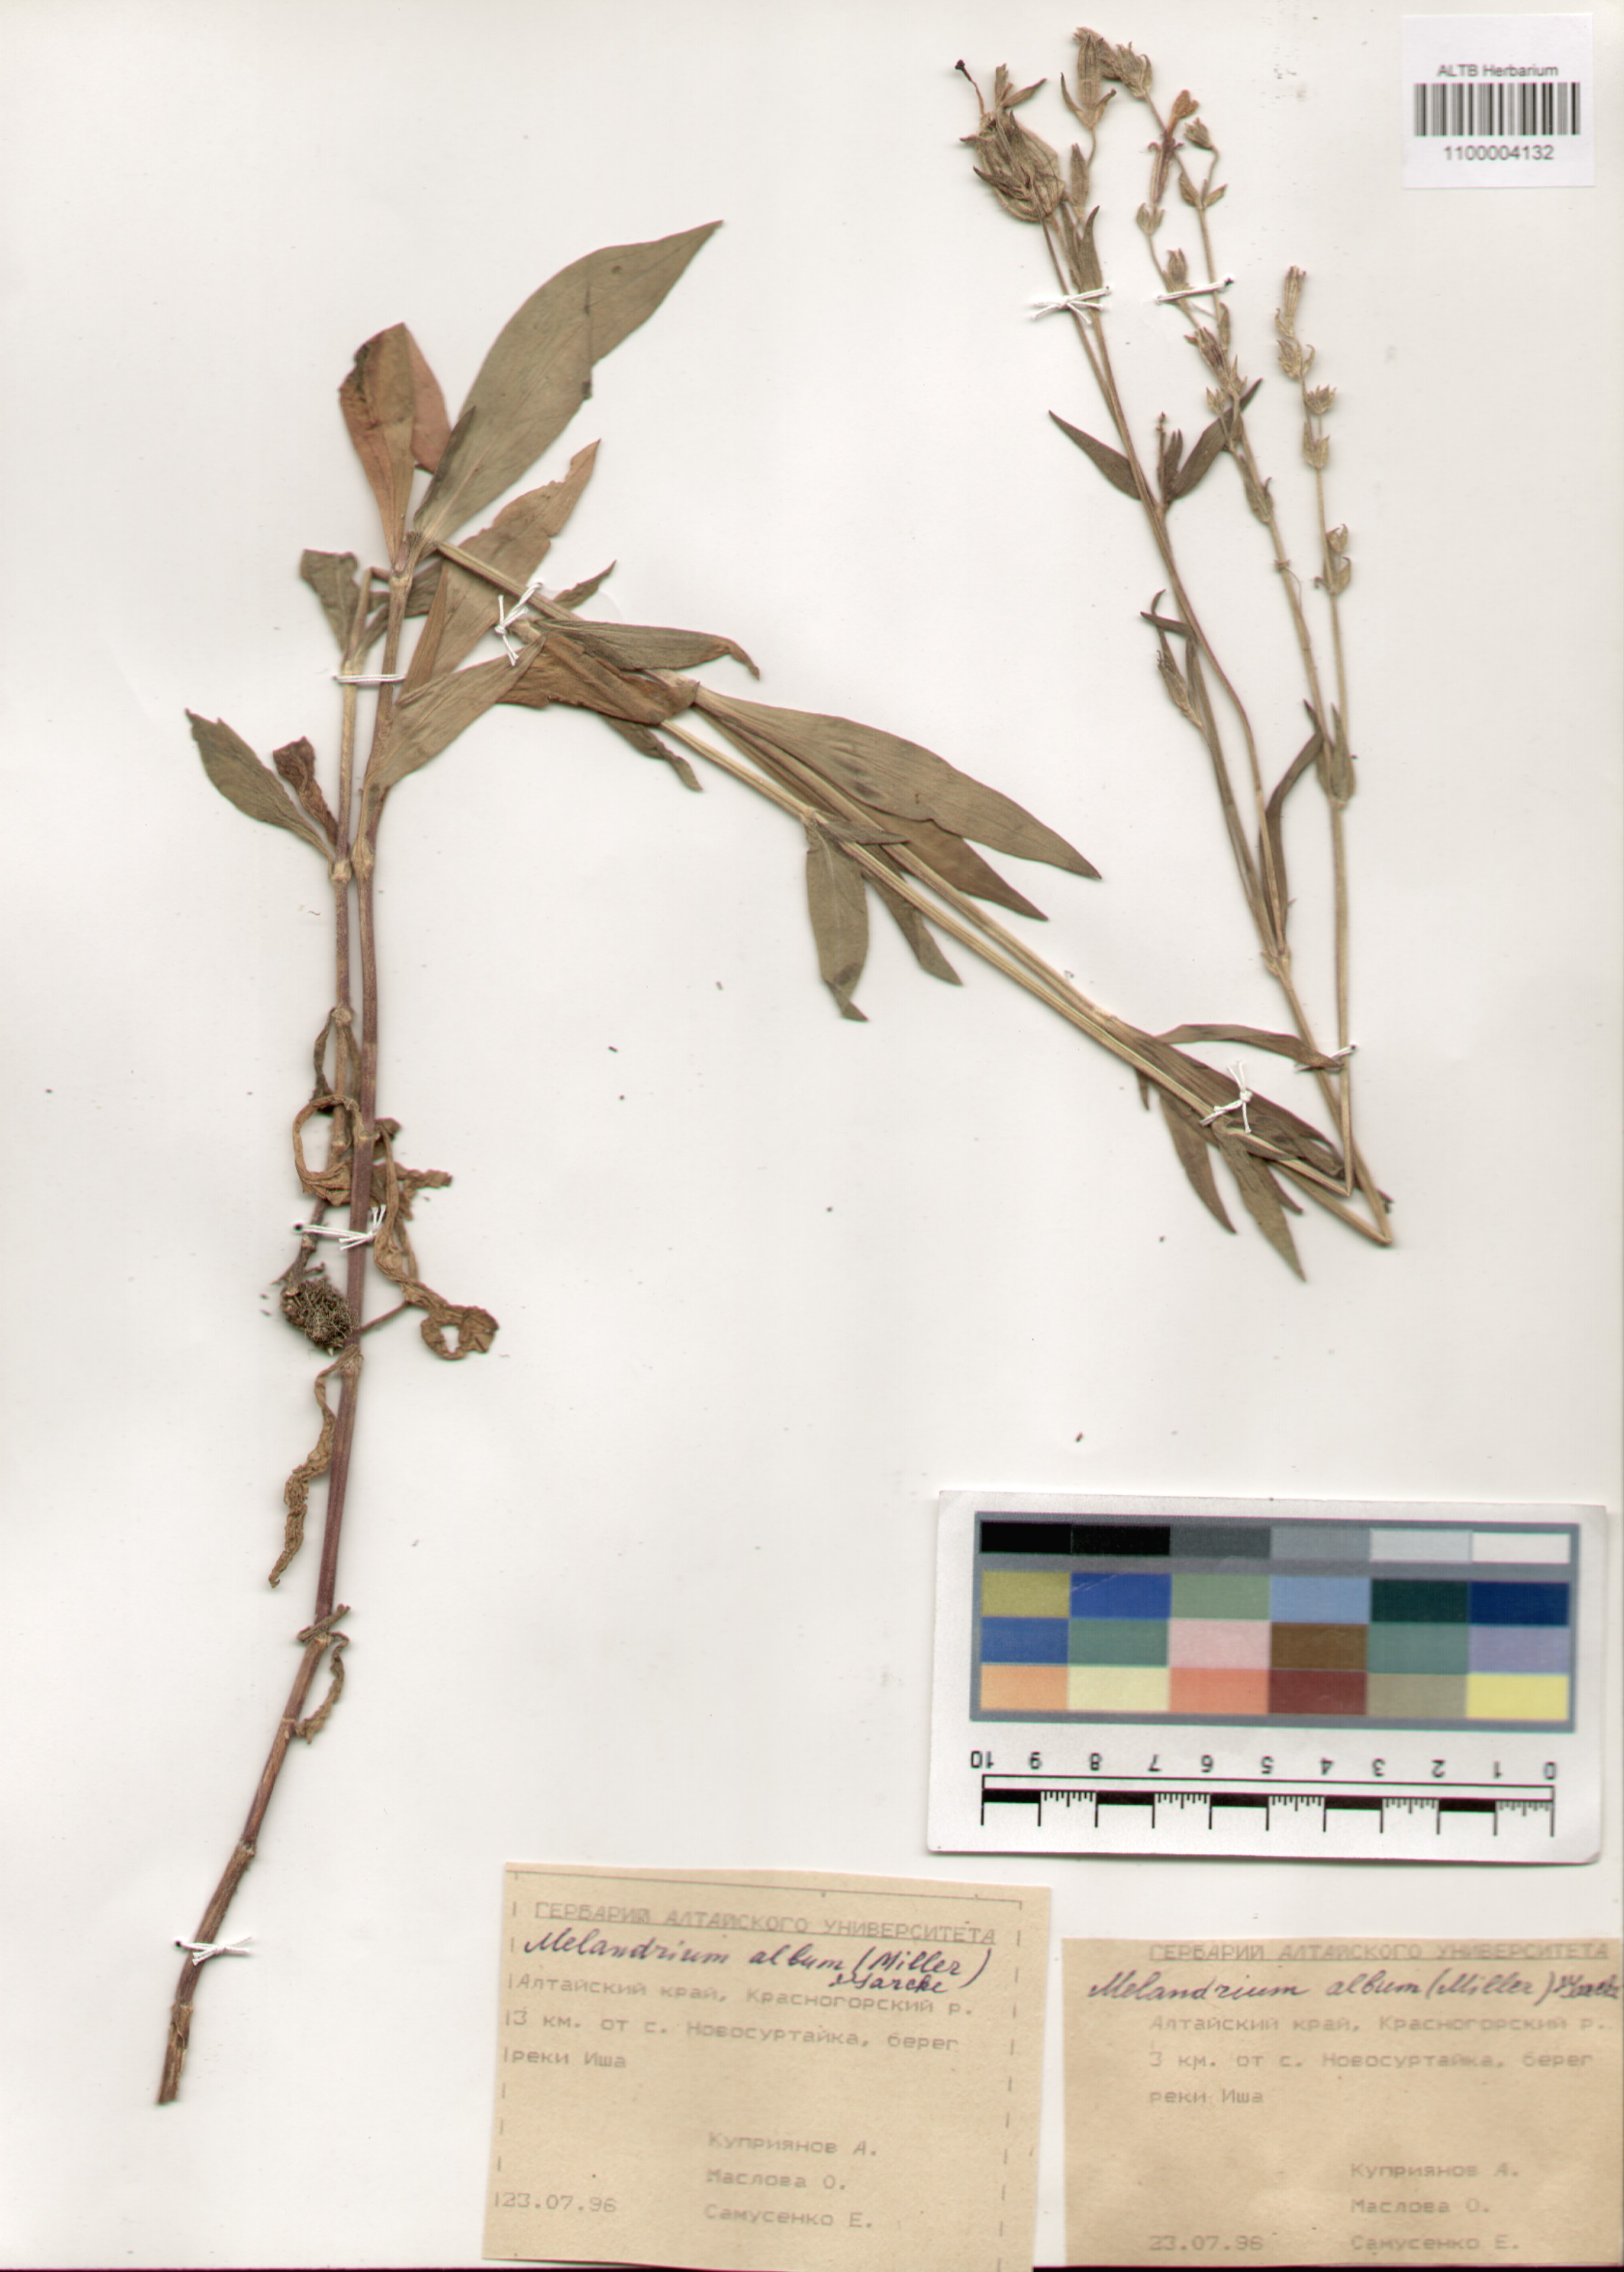 Caryophyllaceae,Melandrium album (Mill.) Garcke.